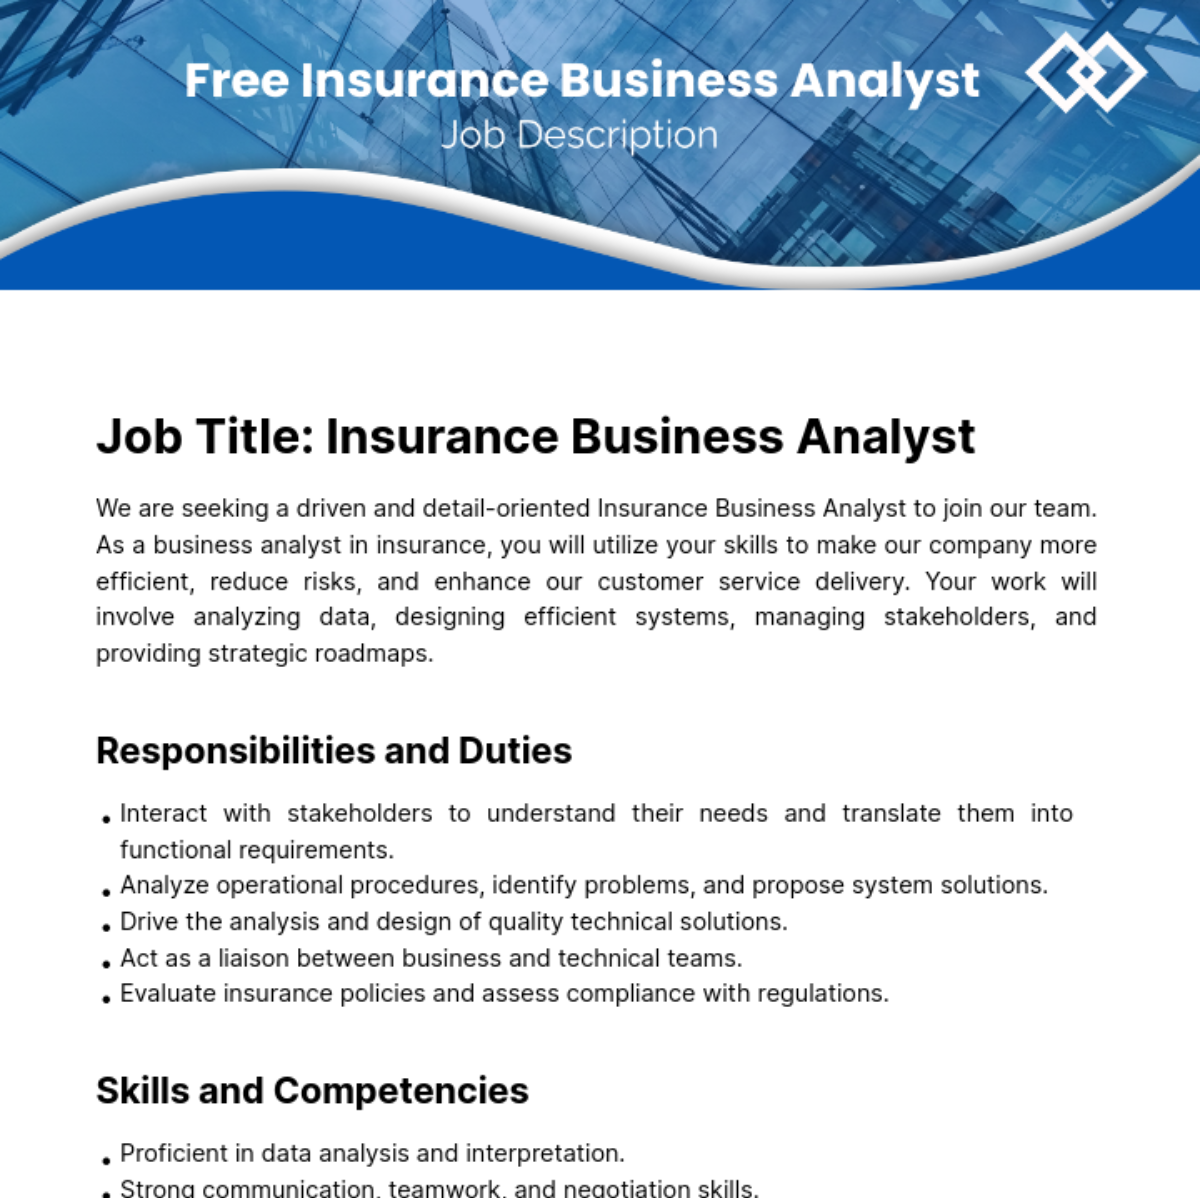 Free Insurance Business Analyst Job Description Template